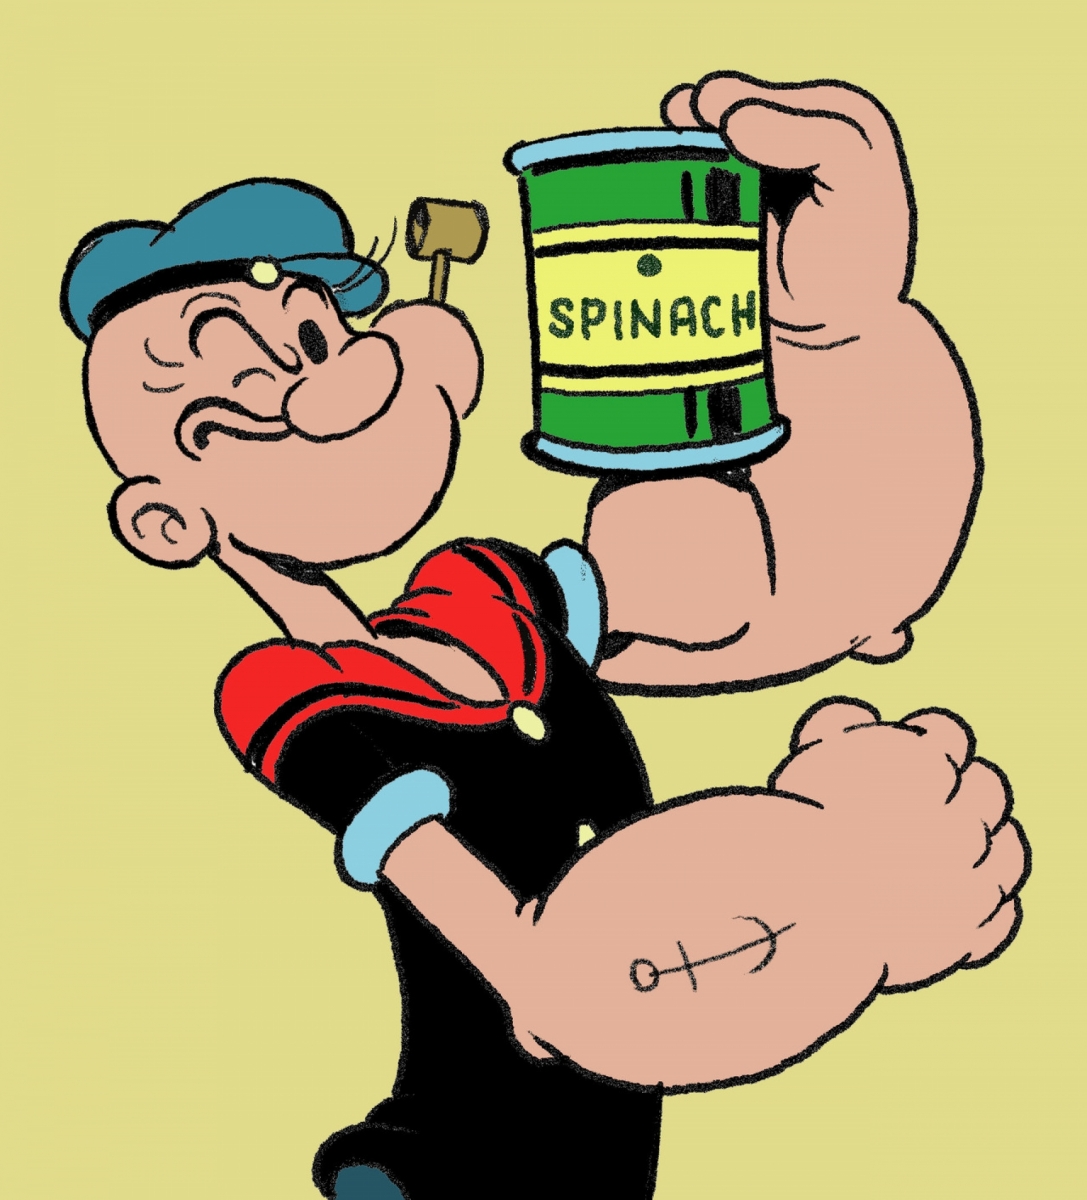 8916-popeye-the-sailor-cartoons-spinach_1920x1080